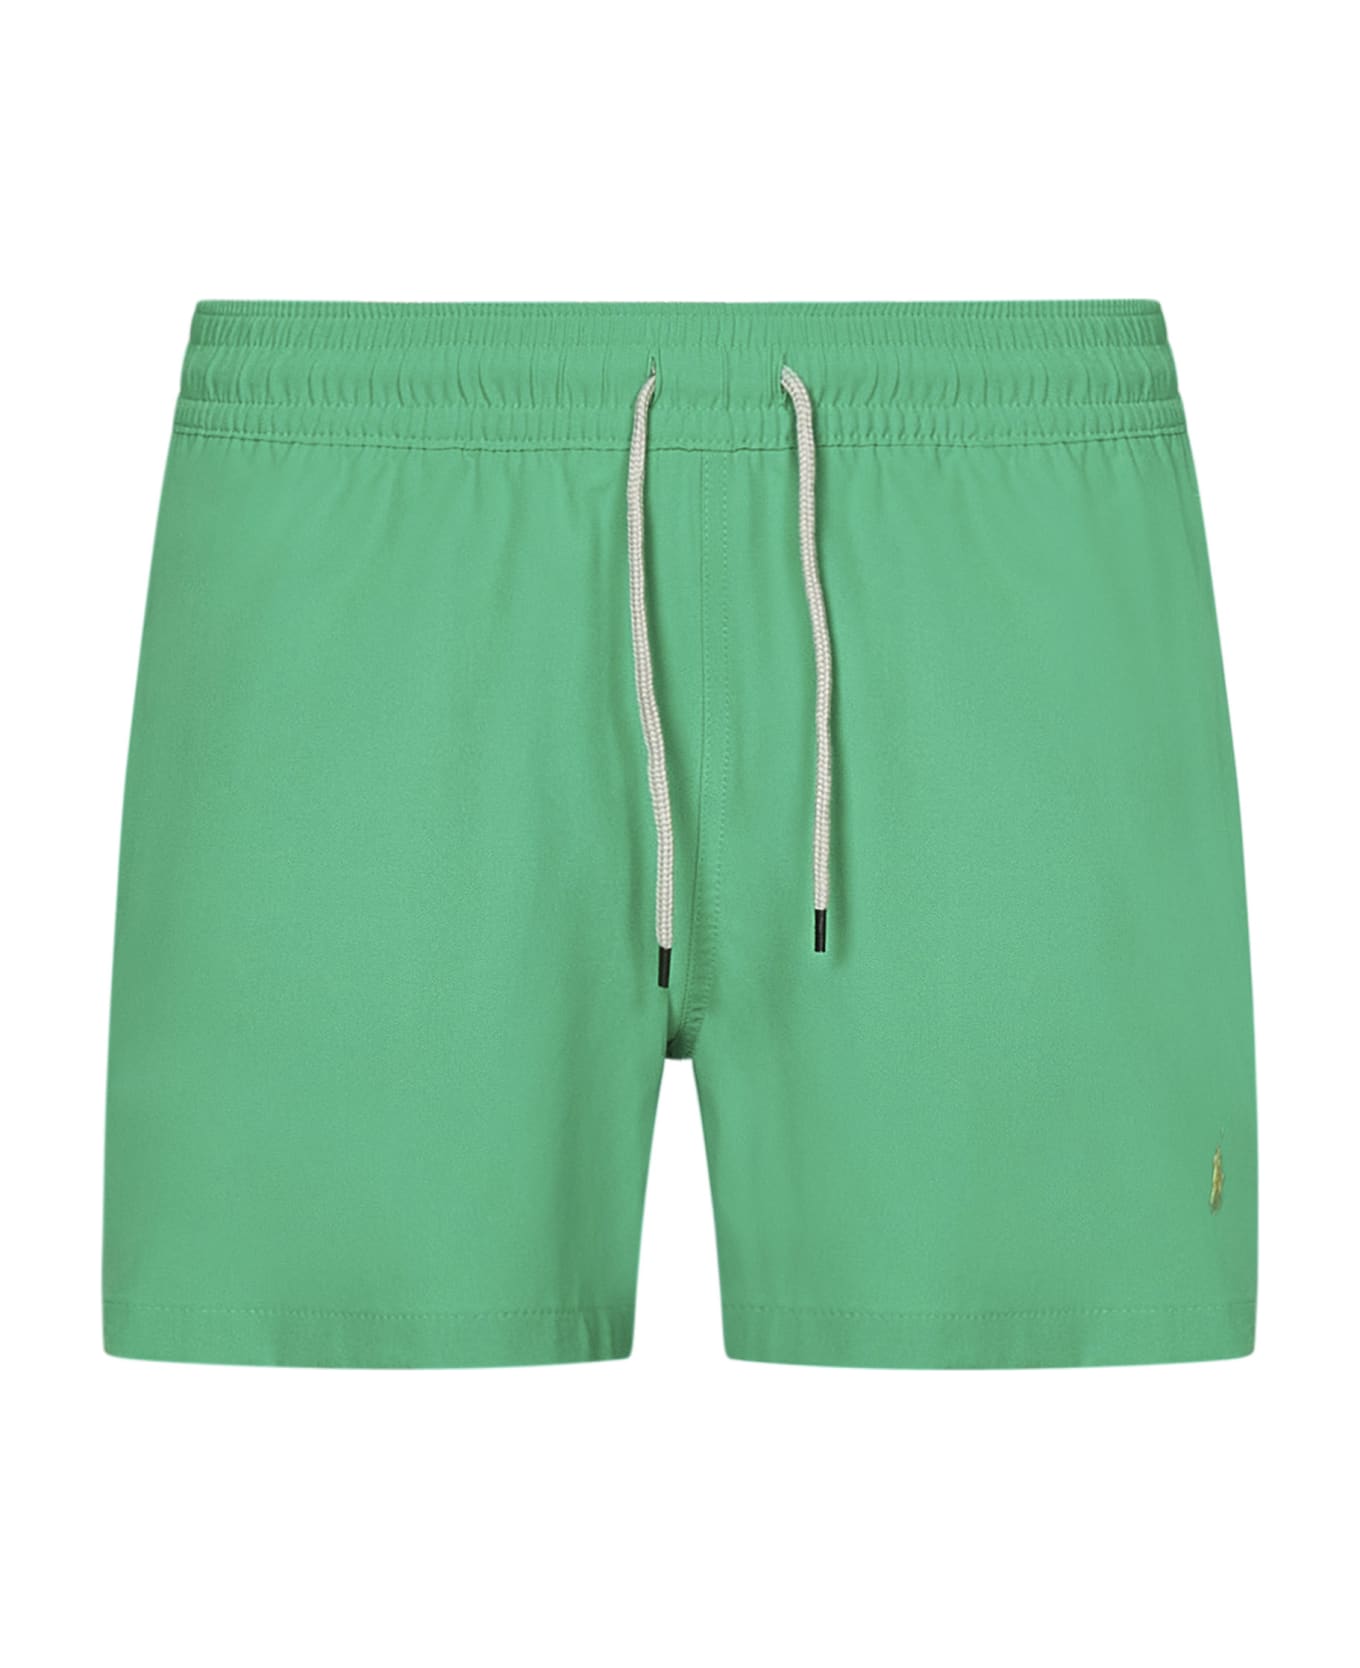 Polo Ralph Lauren Green Swim Shorts With Embroidered Pony - Green スイムトランクス